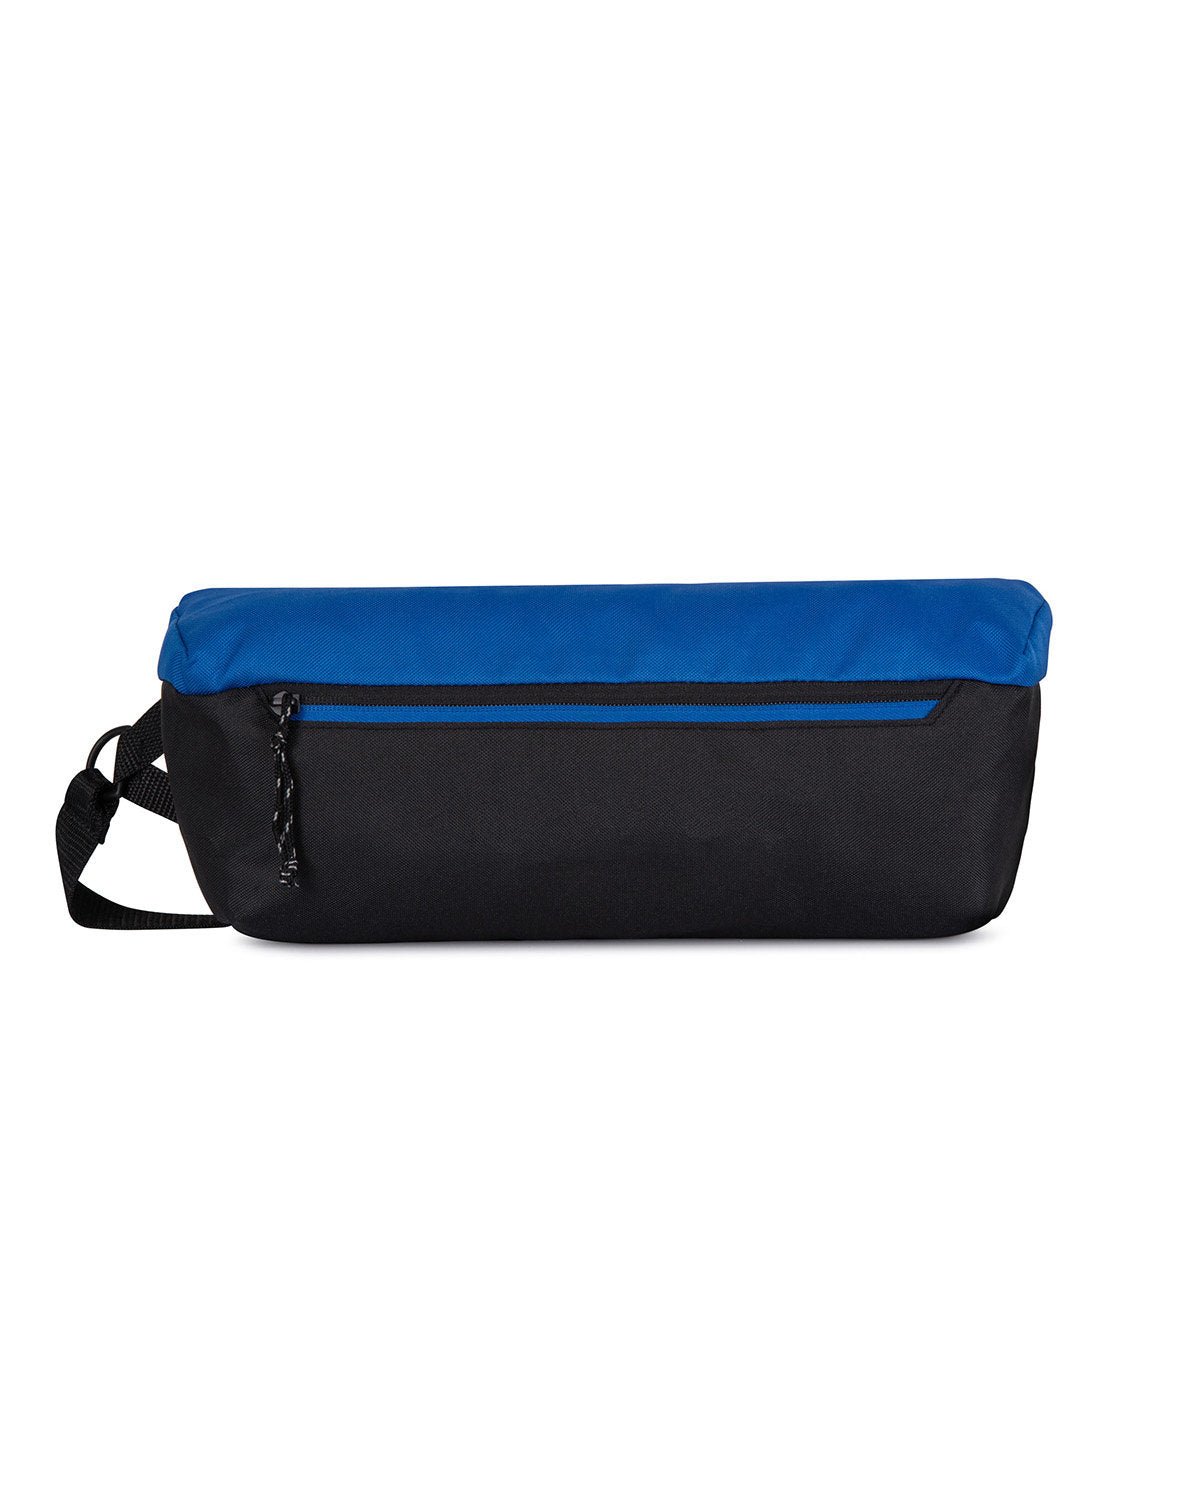 100065-Gemline-ROYAL BLUE-Gemline-Bags and Accessories-1